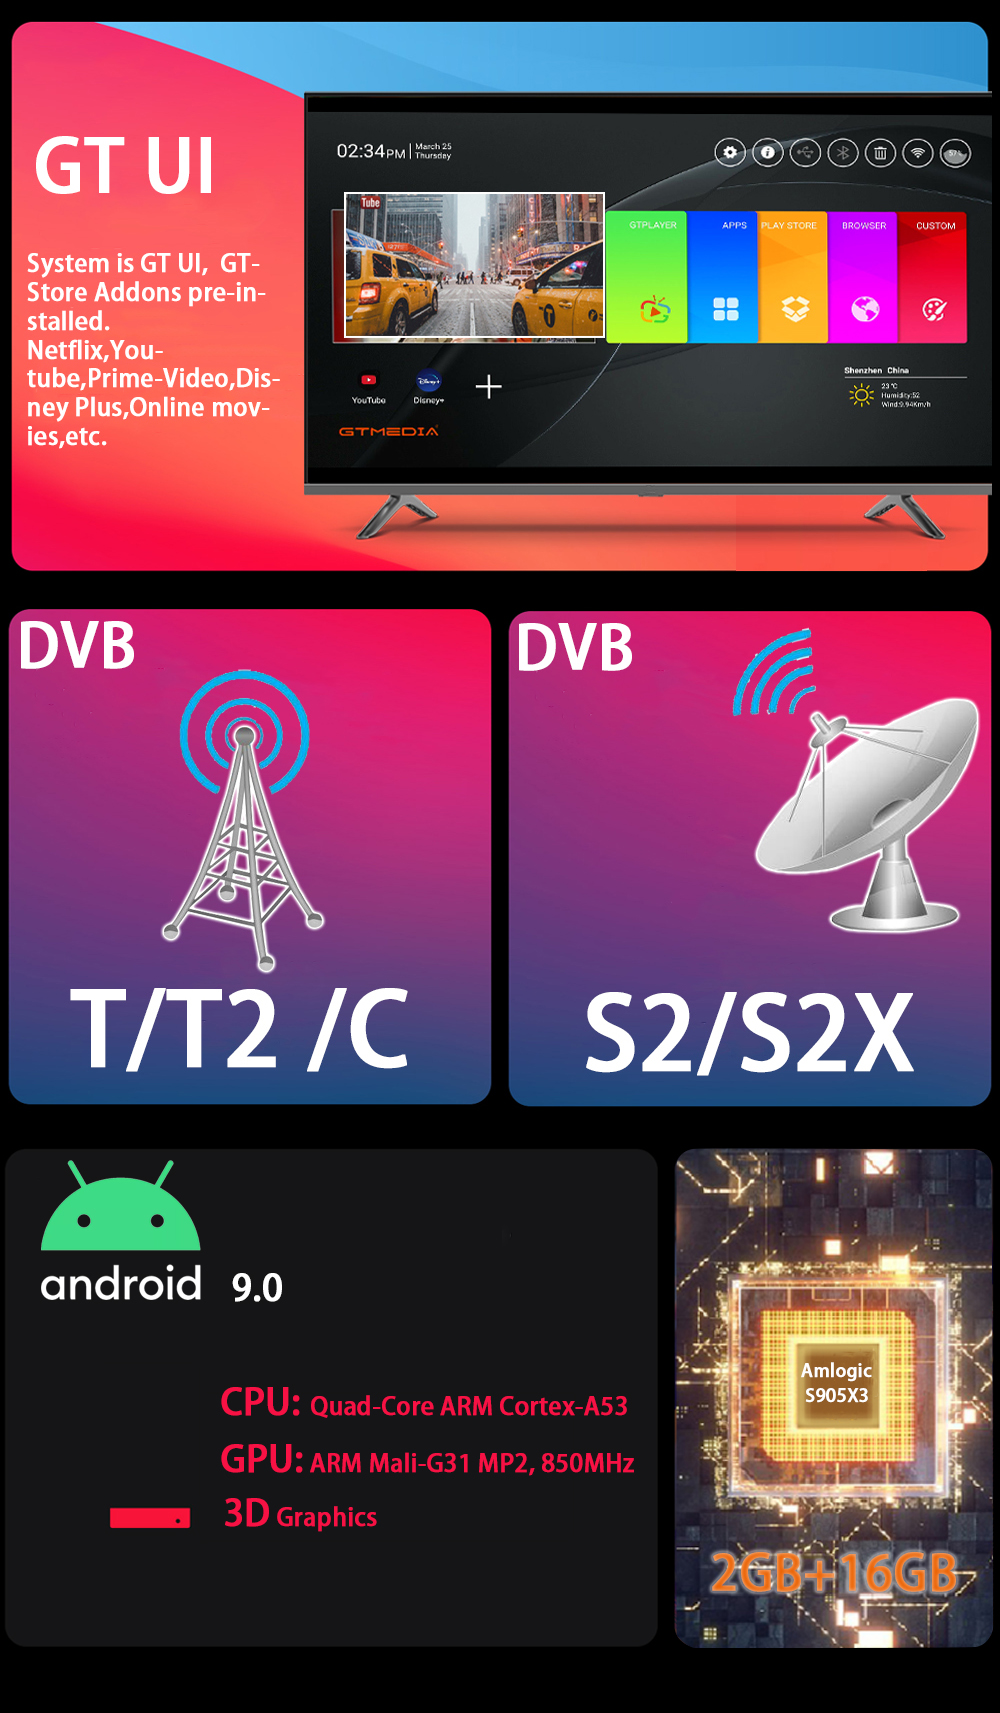 GTMEDIA GTcombo 2 in 1 Amlogic S905X3 Smart TV Box DVB-S2X T2 Satellite TV Receiver 2GB RAM 16GB ROM Android 9.0 H.265 HD 4K 2.4G 5G WIFI bluetooth Support CA Card IPTV Youtube Netflix for Disney